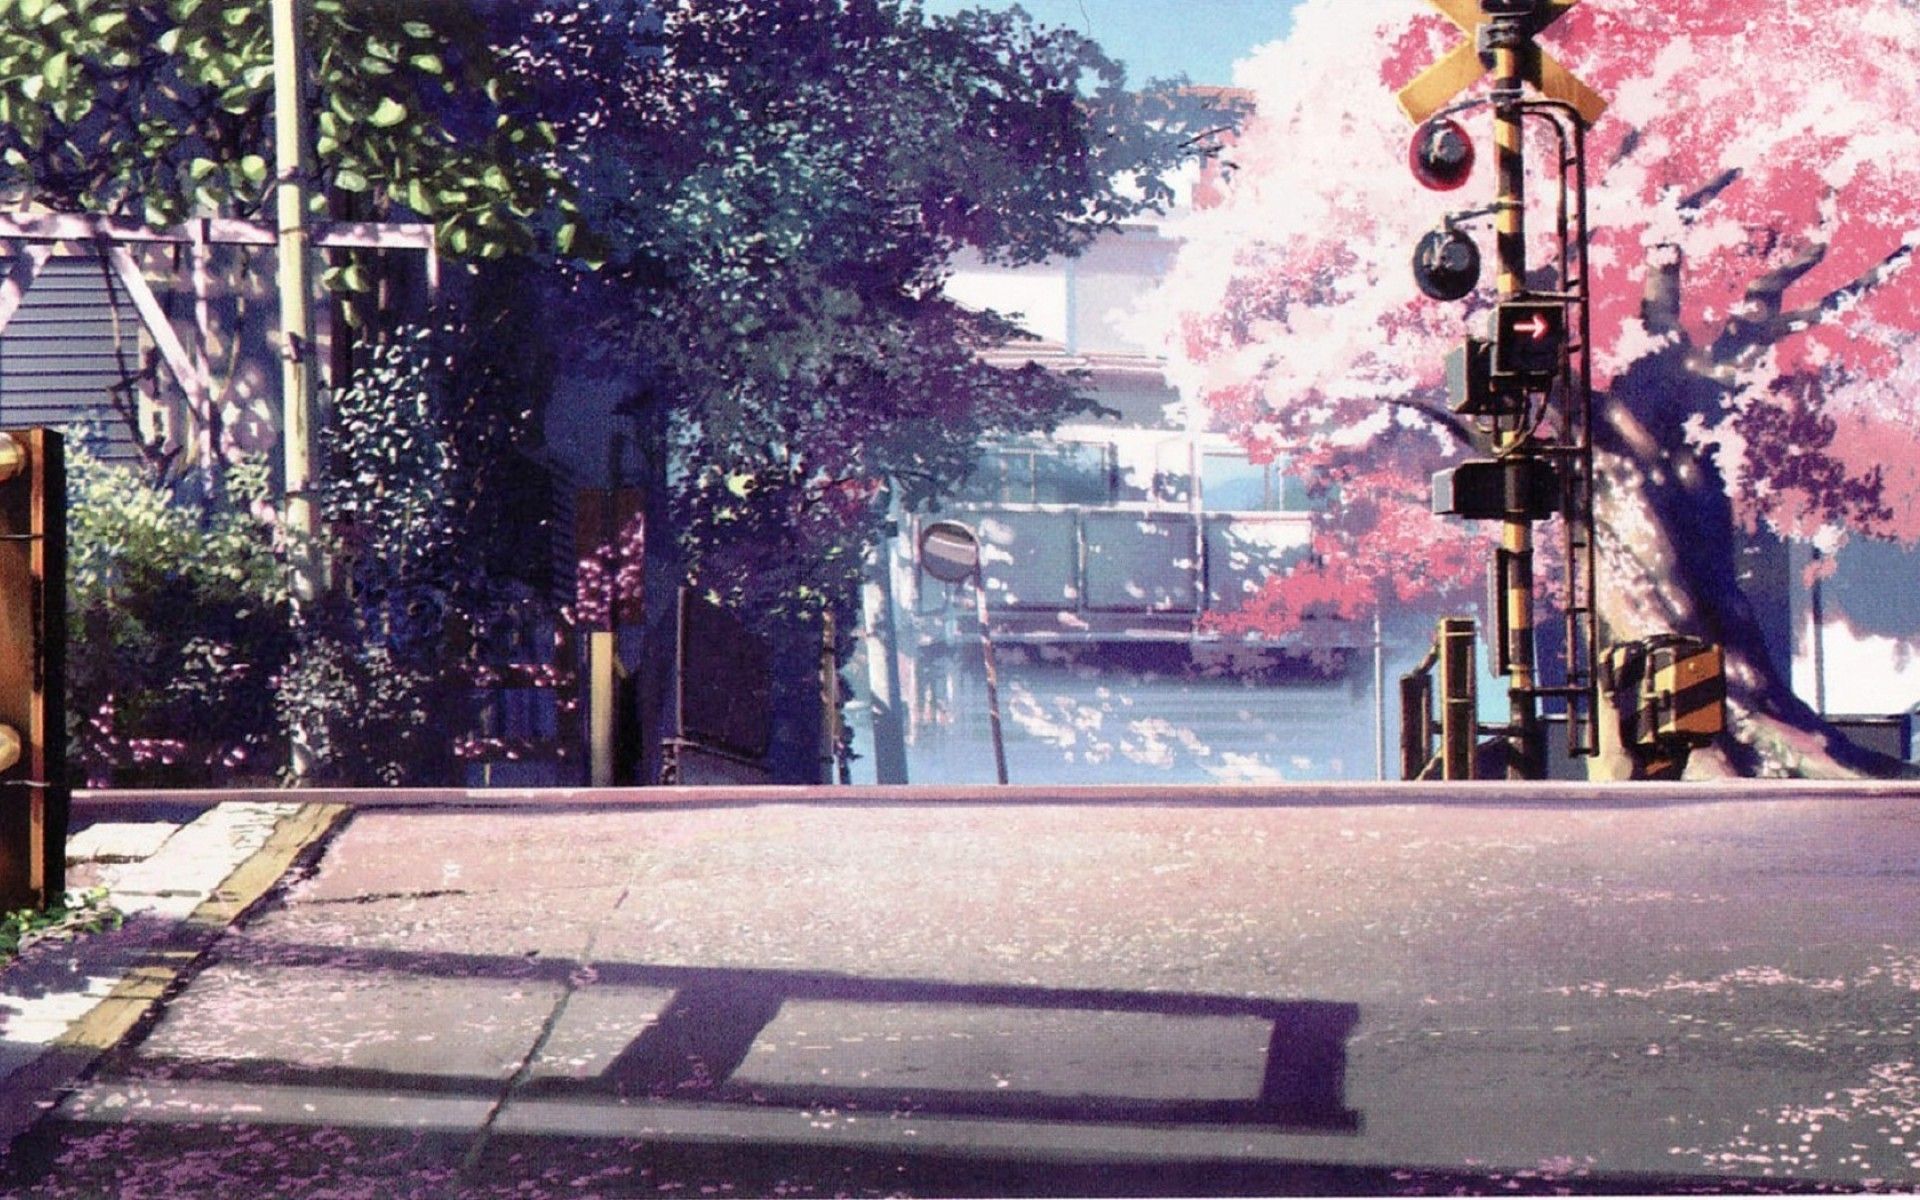 Wattpad BG: Anime Outdoor Backgrounds by MARKNAEXCIII on DeviantArt